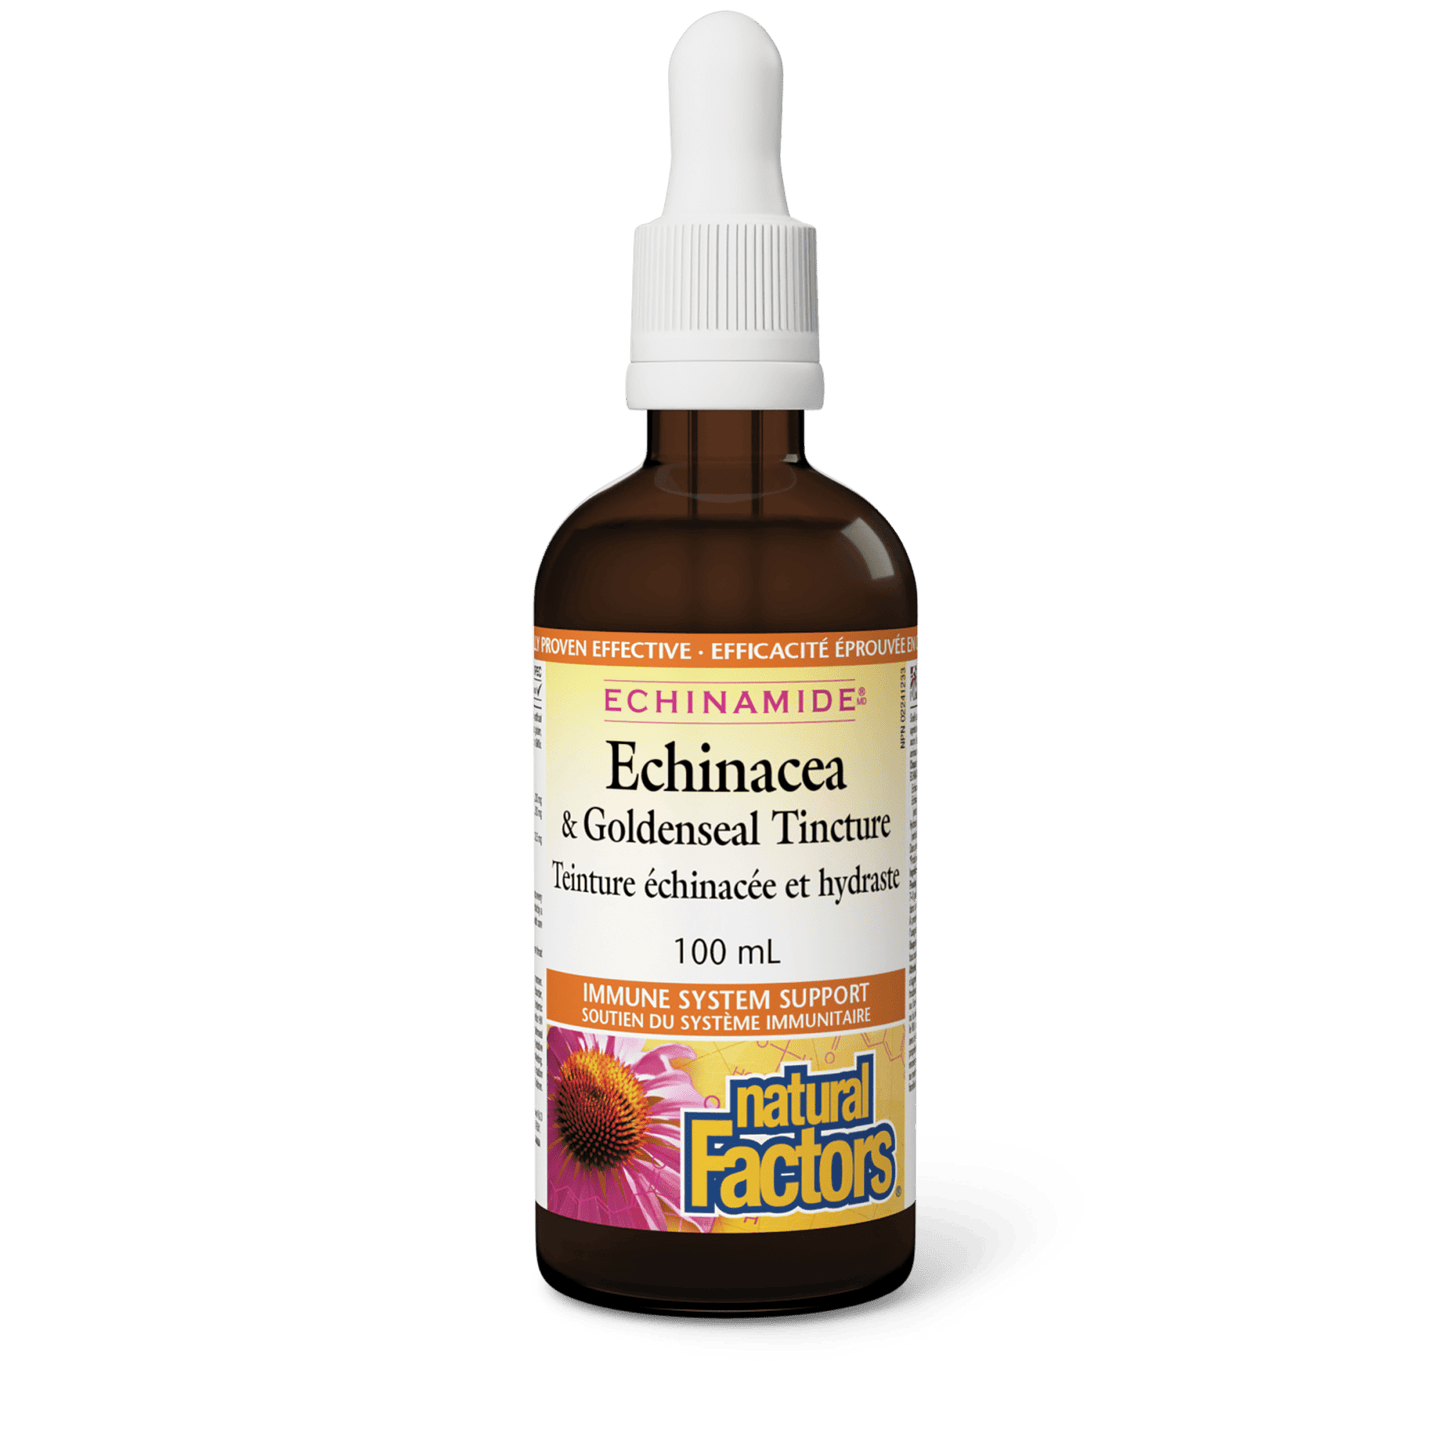 Echinacea & Goldenseal Tincture, ECHINAMIDE, Natural Factors|v|image|4731